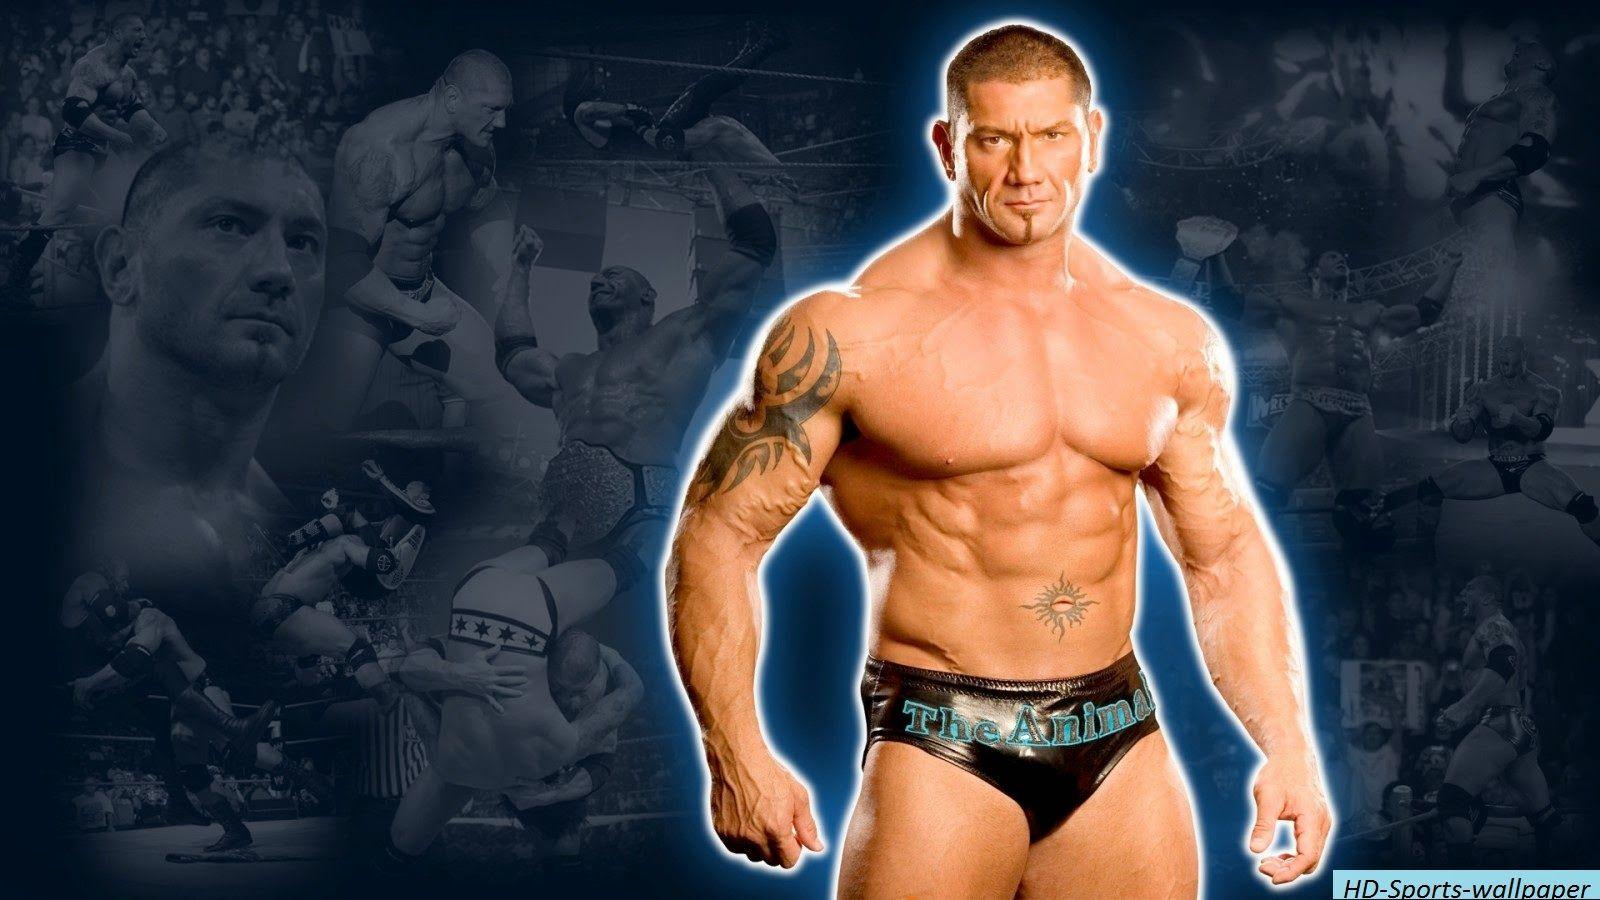 HD Wallpaper of Batista wrestling in urdu